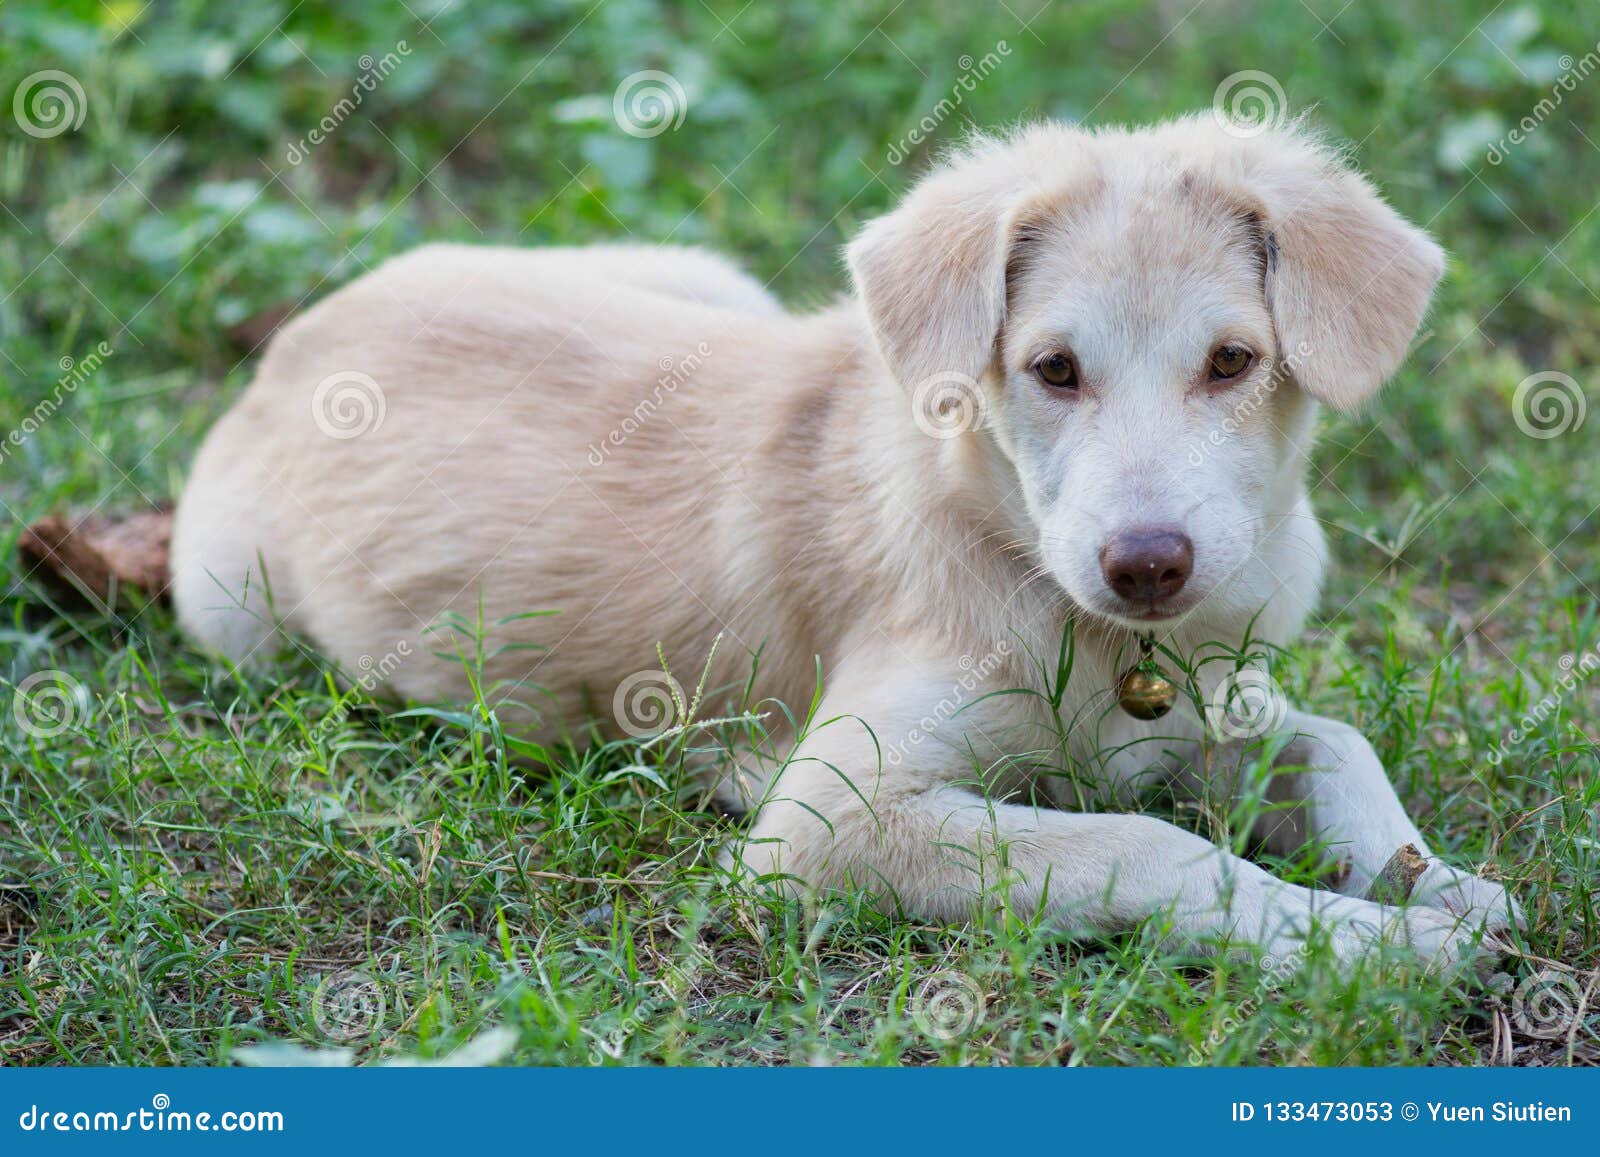 Spitz X Golden Retriever Puppy Stock Image Image Of Lawn Backyard 133473053